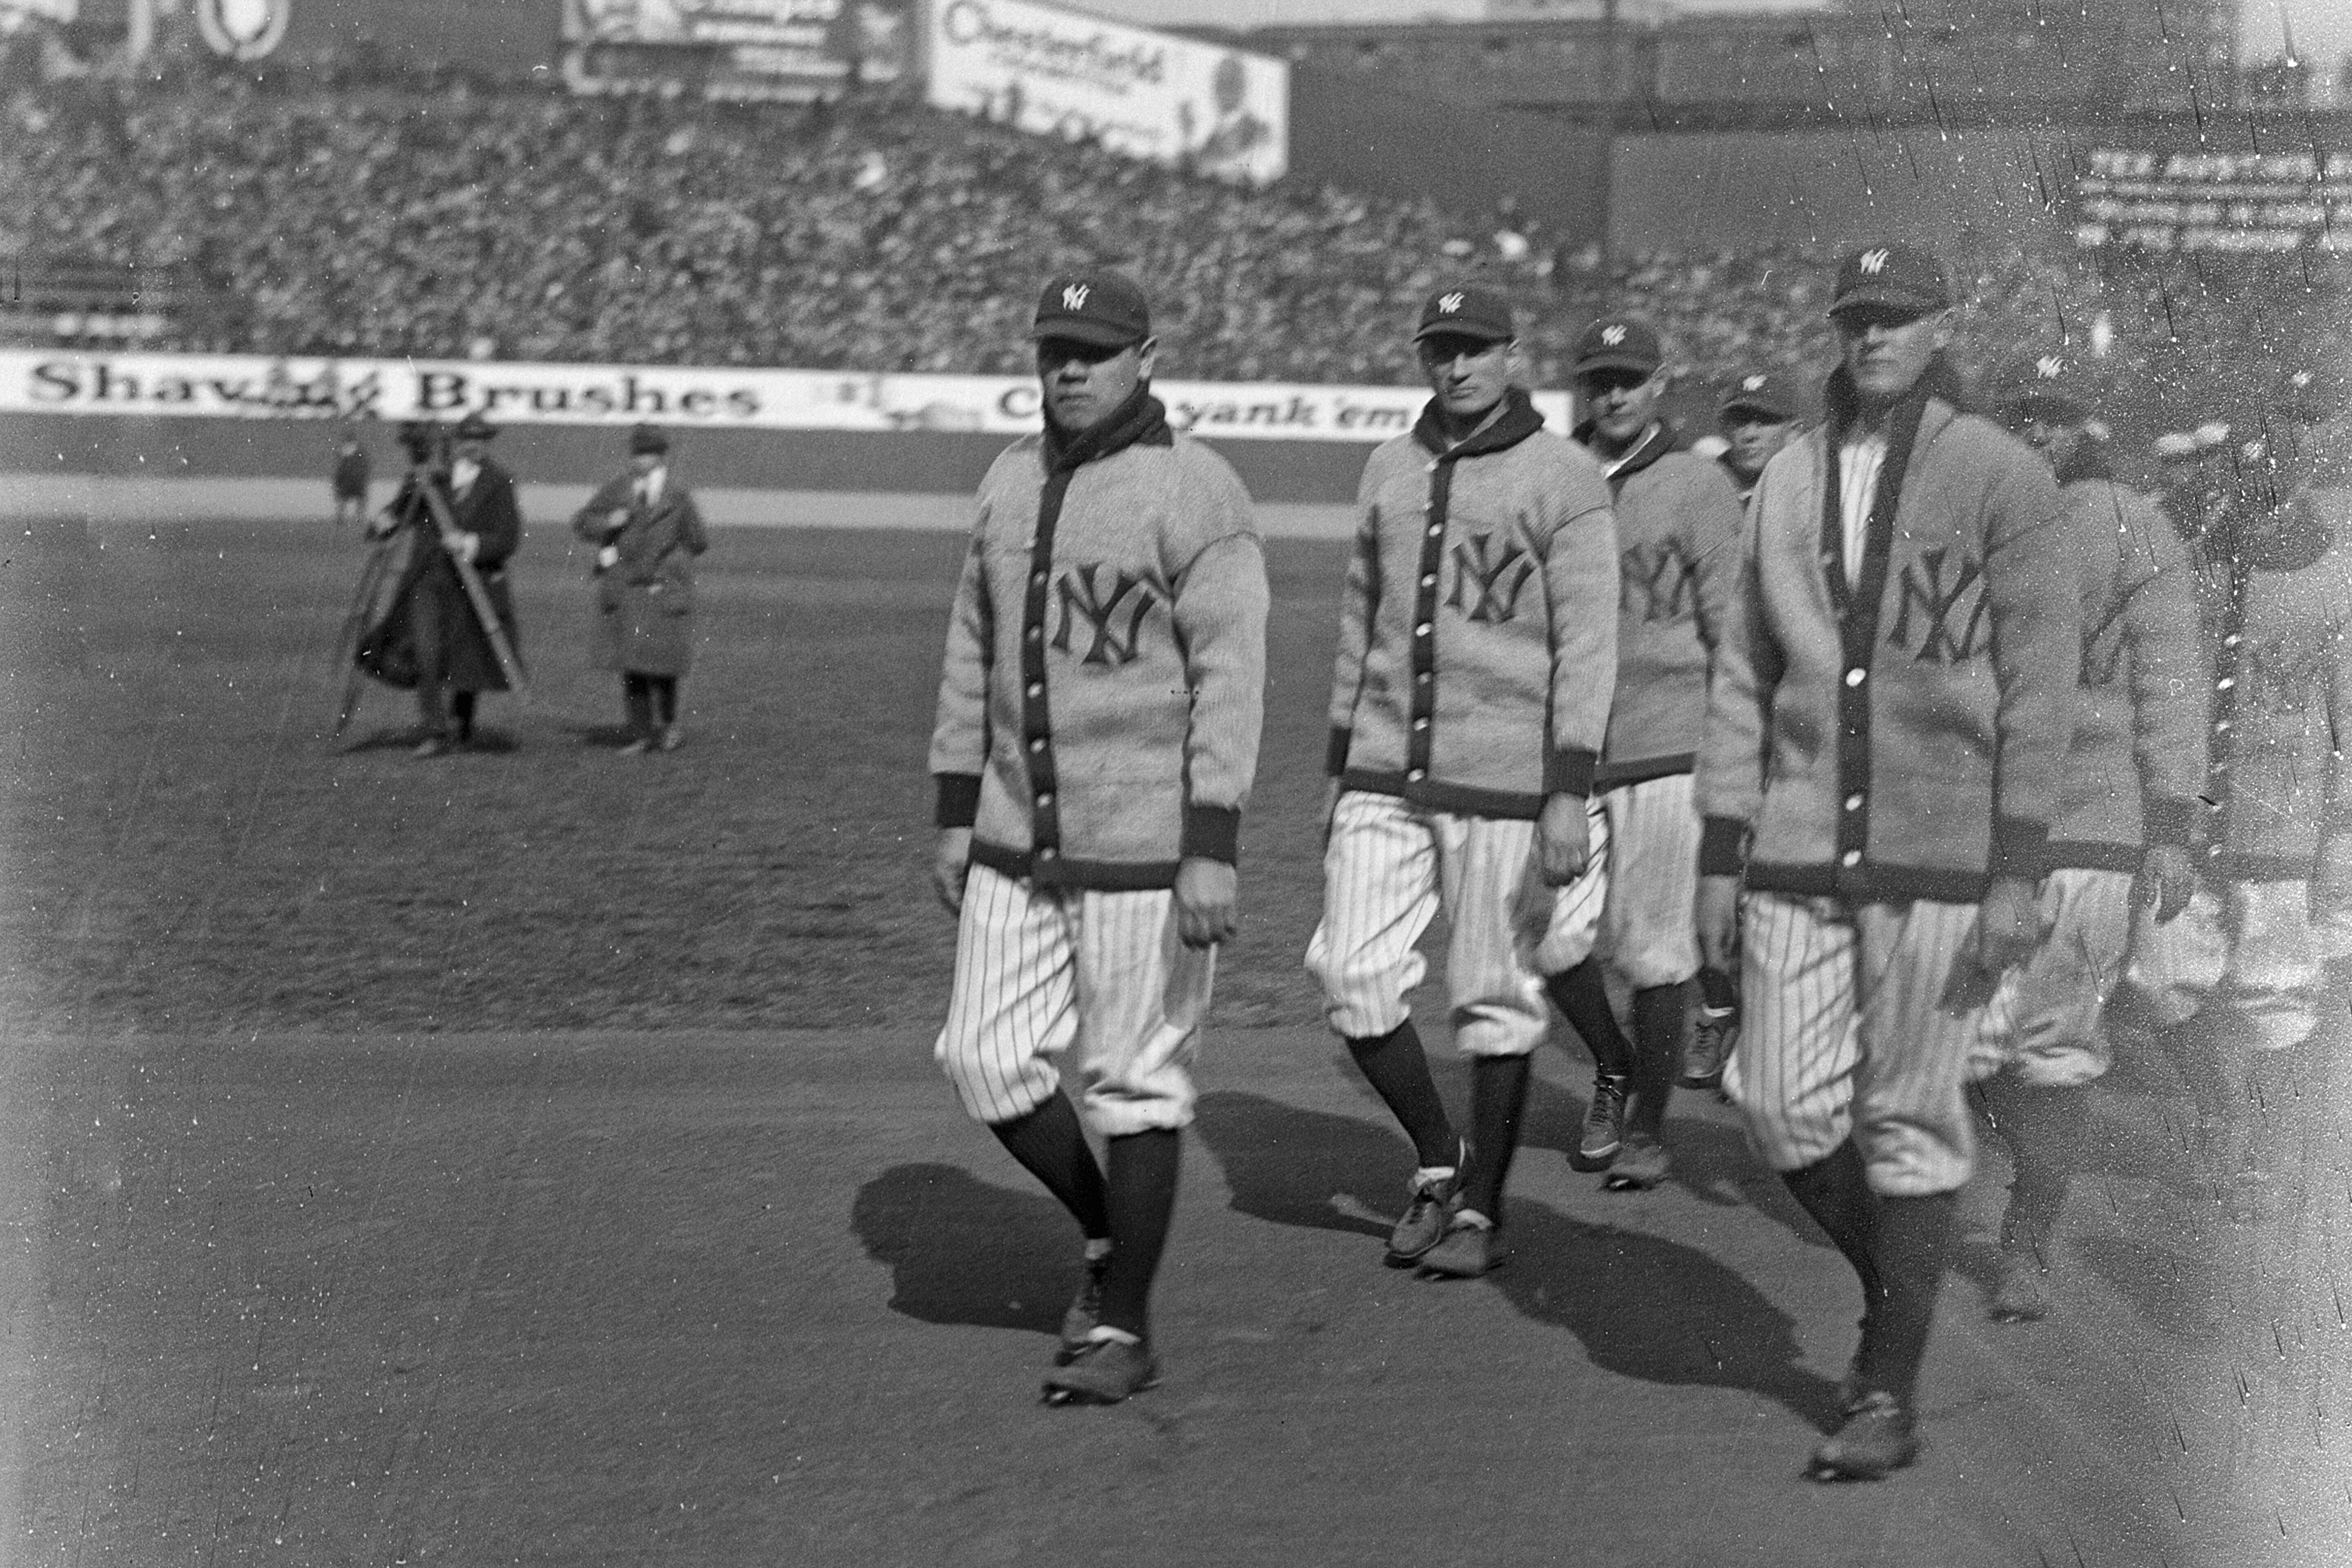 Babe Ruth & Derek Jeter New York Yankees 1923 & 1996 World Series